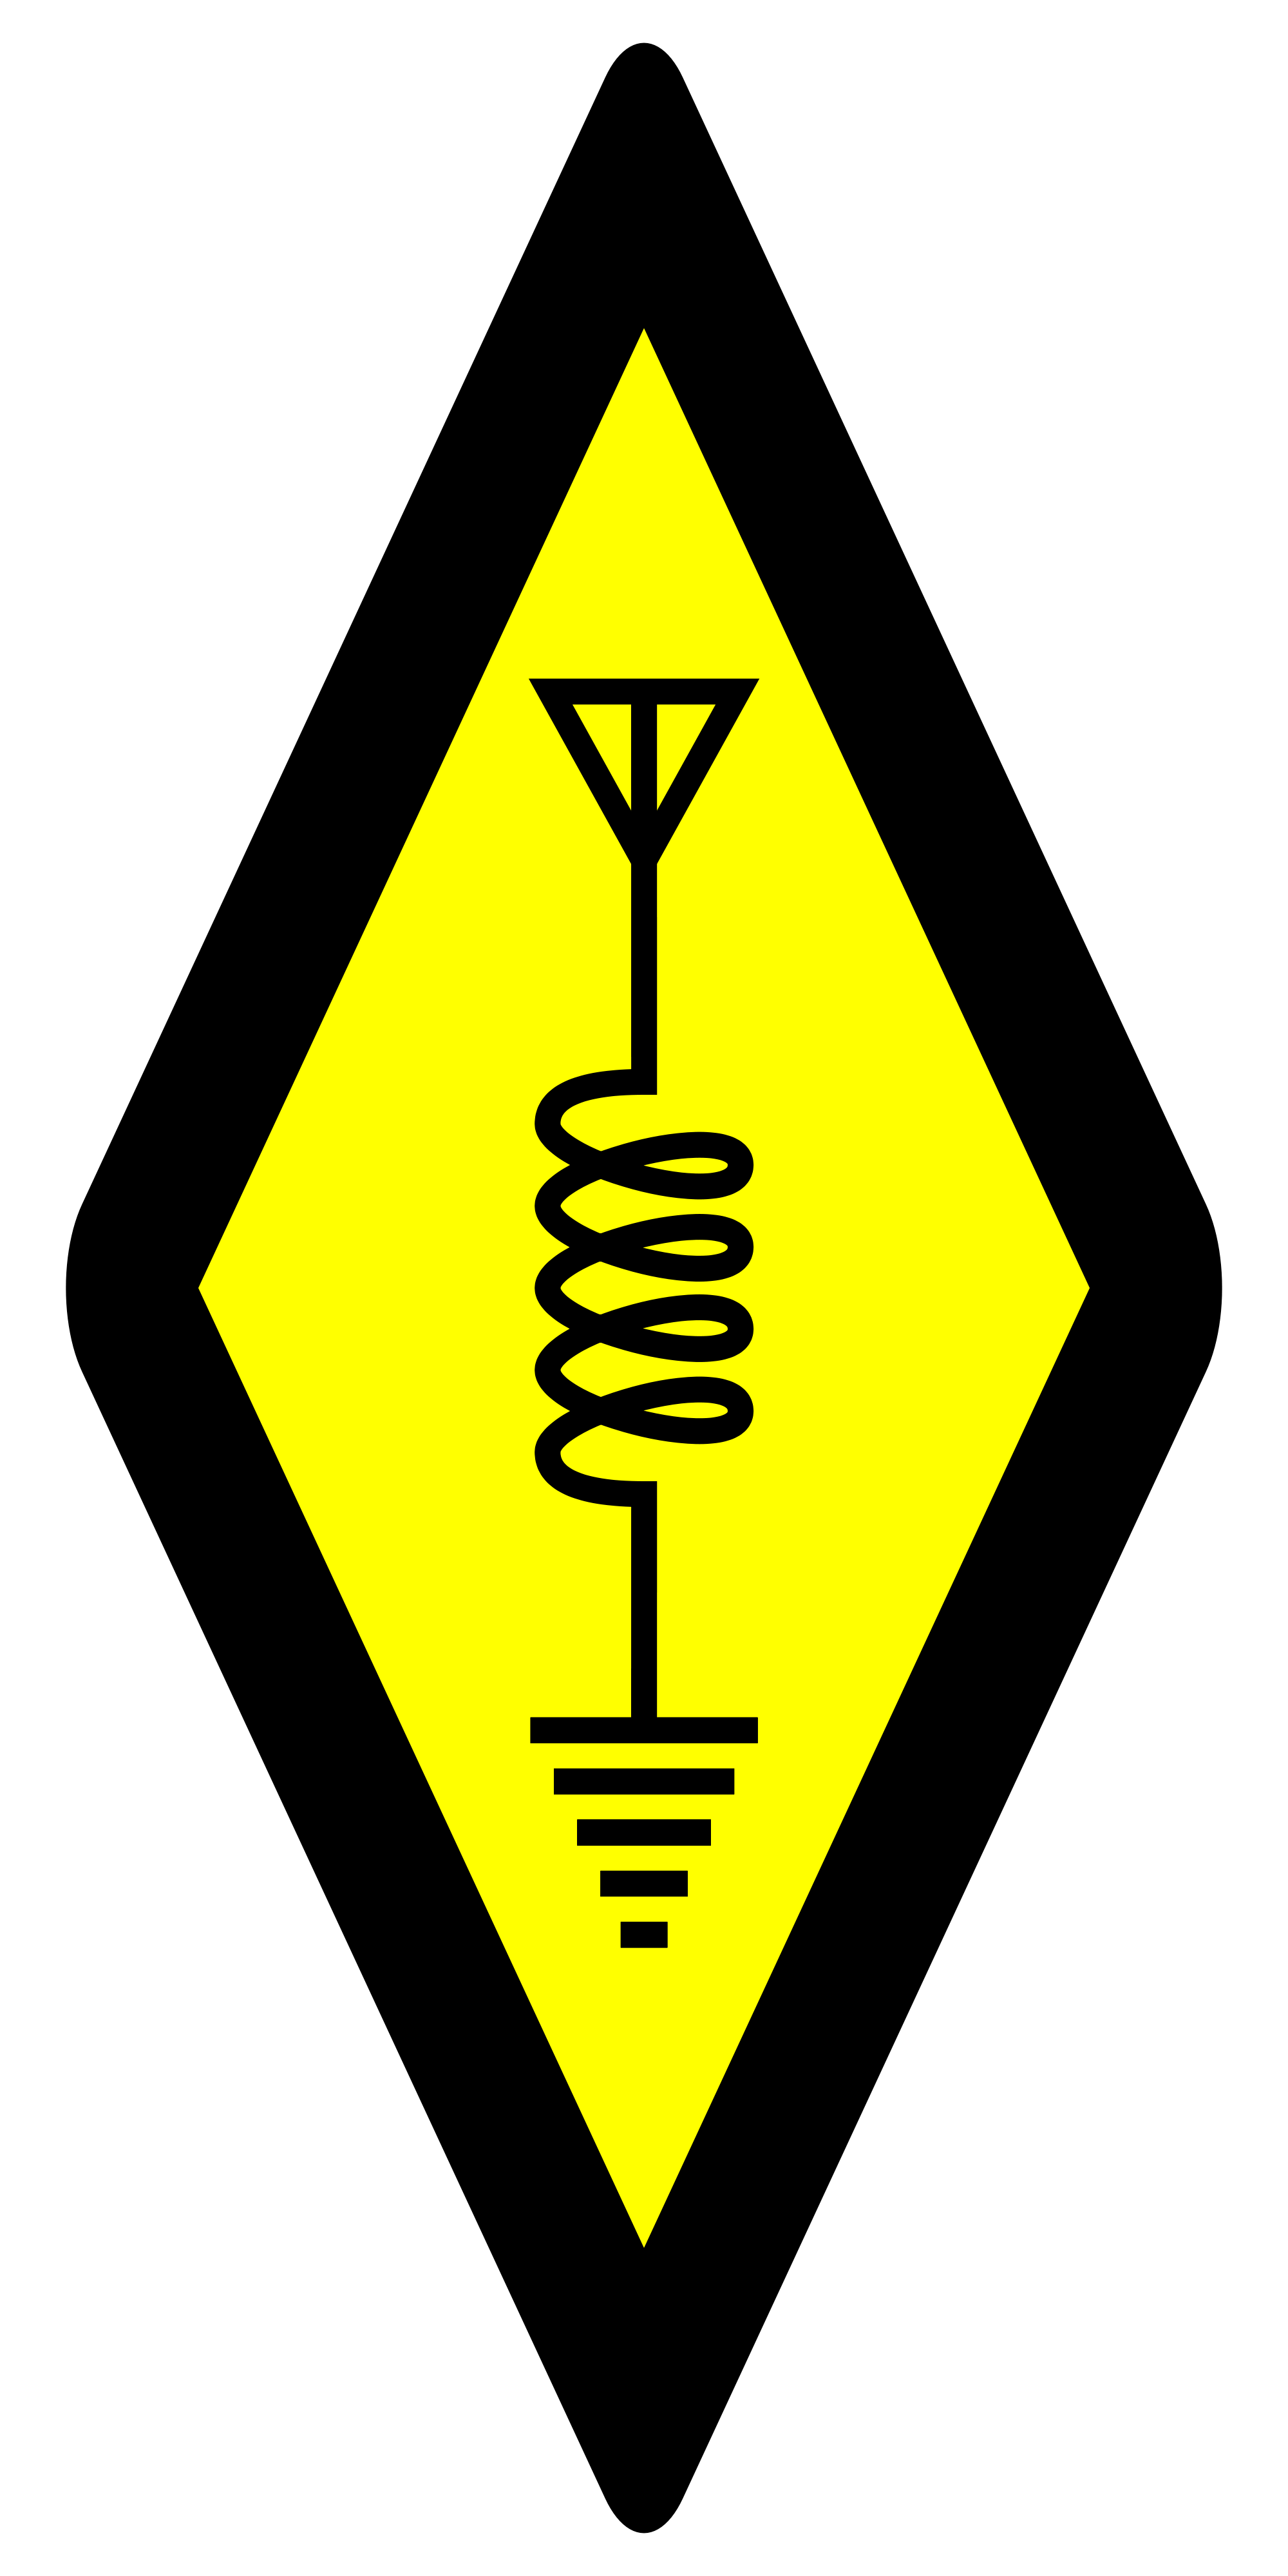 File:International amateur radio symbol.svg